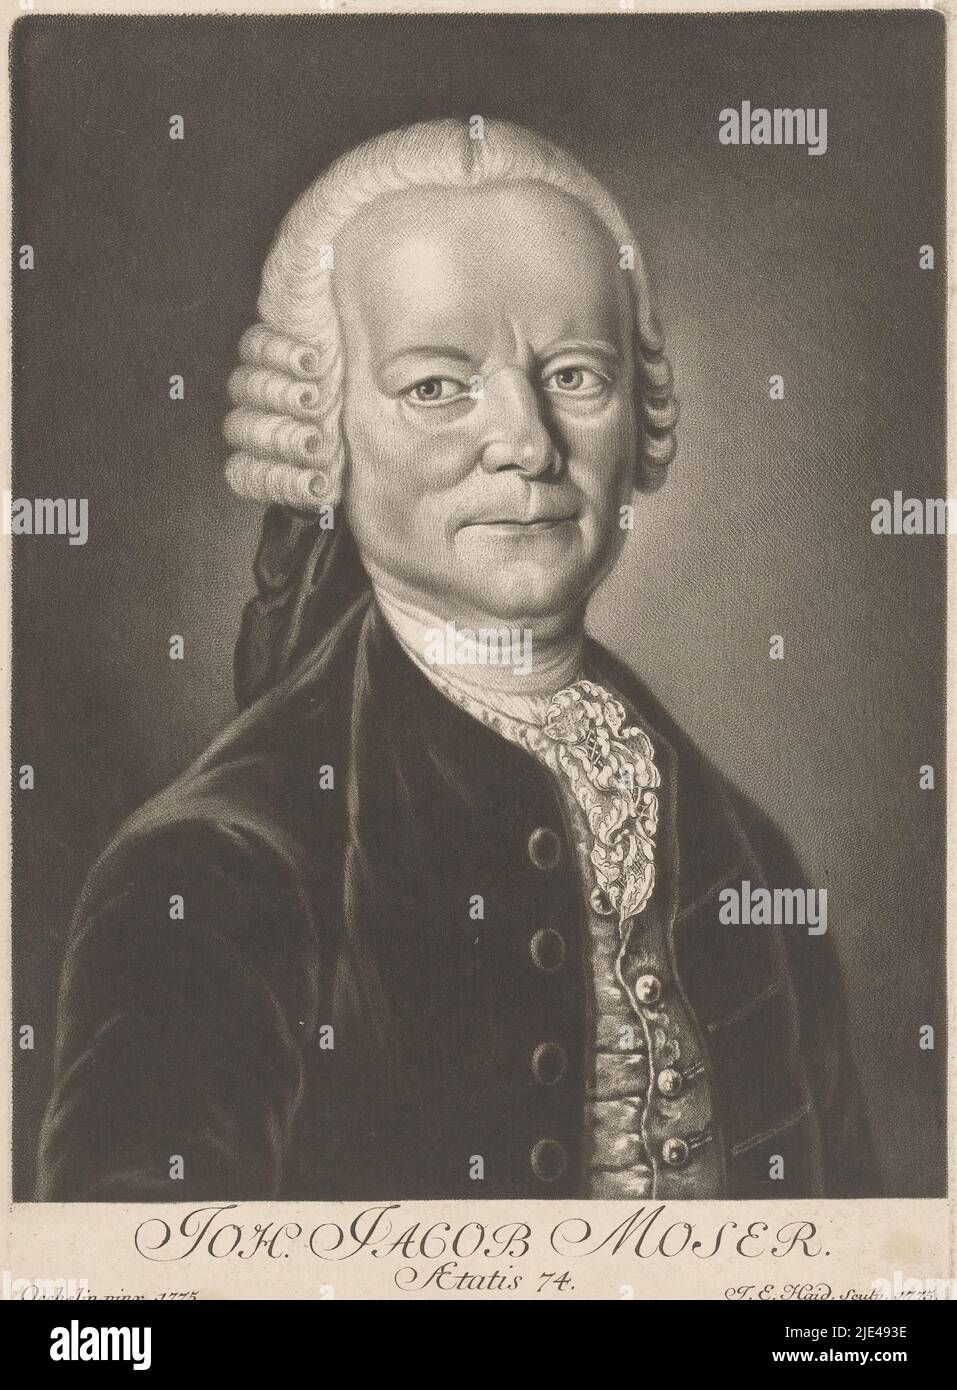 Portrait of Johann Jakob Moser at age 74, Johann Elias Haid, after Johann Georg Oechslin, 1775, print maker: Johann Elias Haid, (mentioned on object), after: Johann Georg Oechslin, (mentioned on object), 1775, paper, etching, h 201 mm - w 145 mm Stock Photo